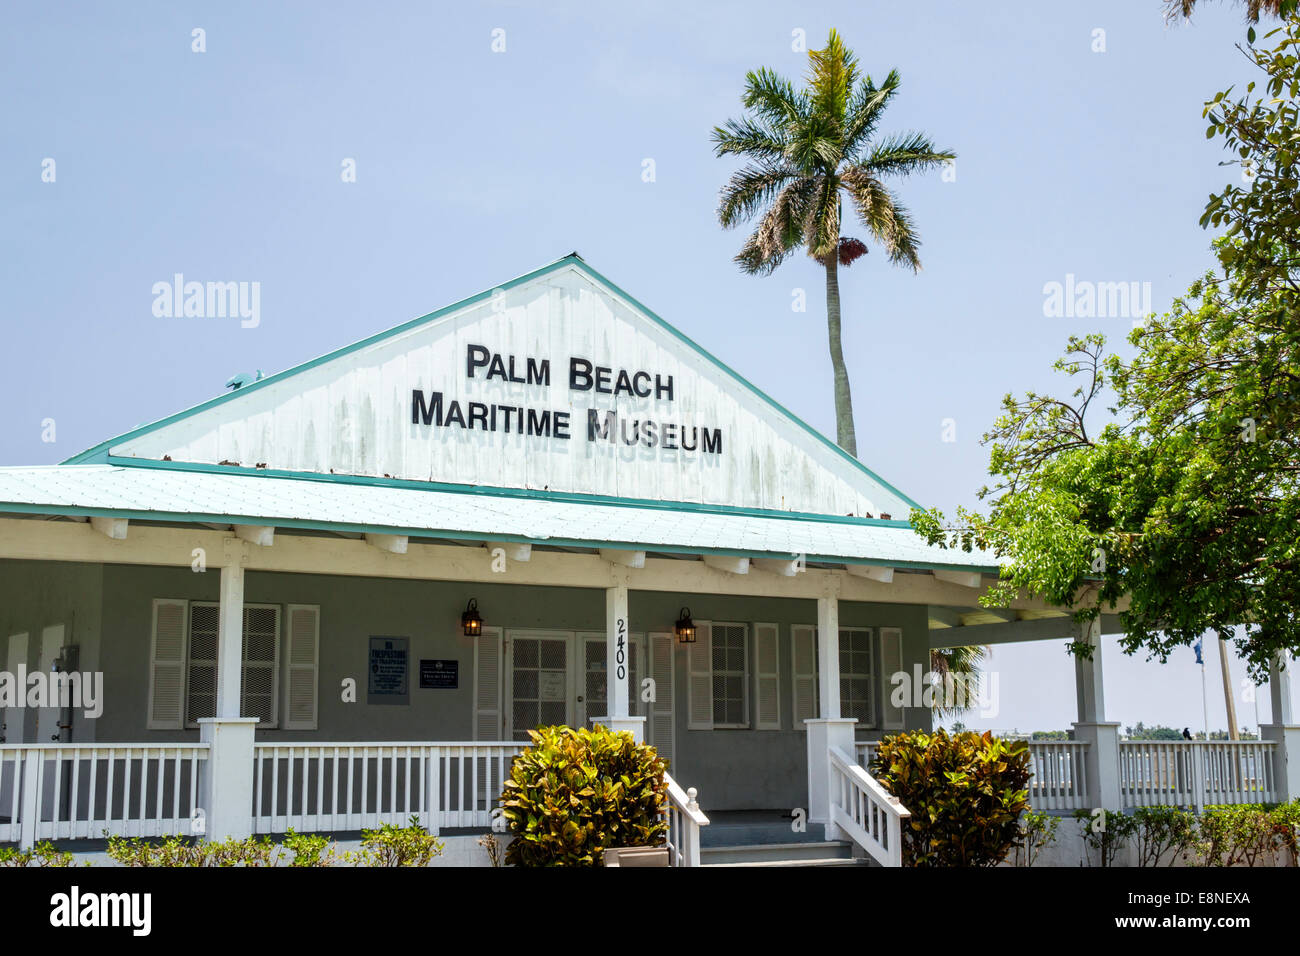 West Palm Beach Florida, North Flagler Drive, Currie Park, Palm Beach Maritime Museum, Vorderseite, Eingang, FL140524015 Stockfoto